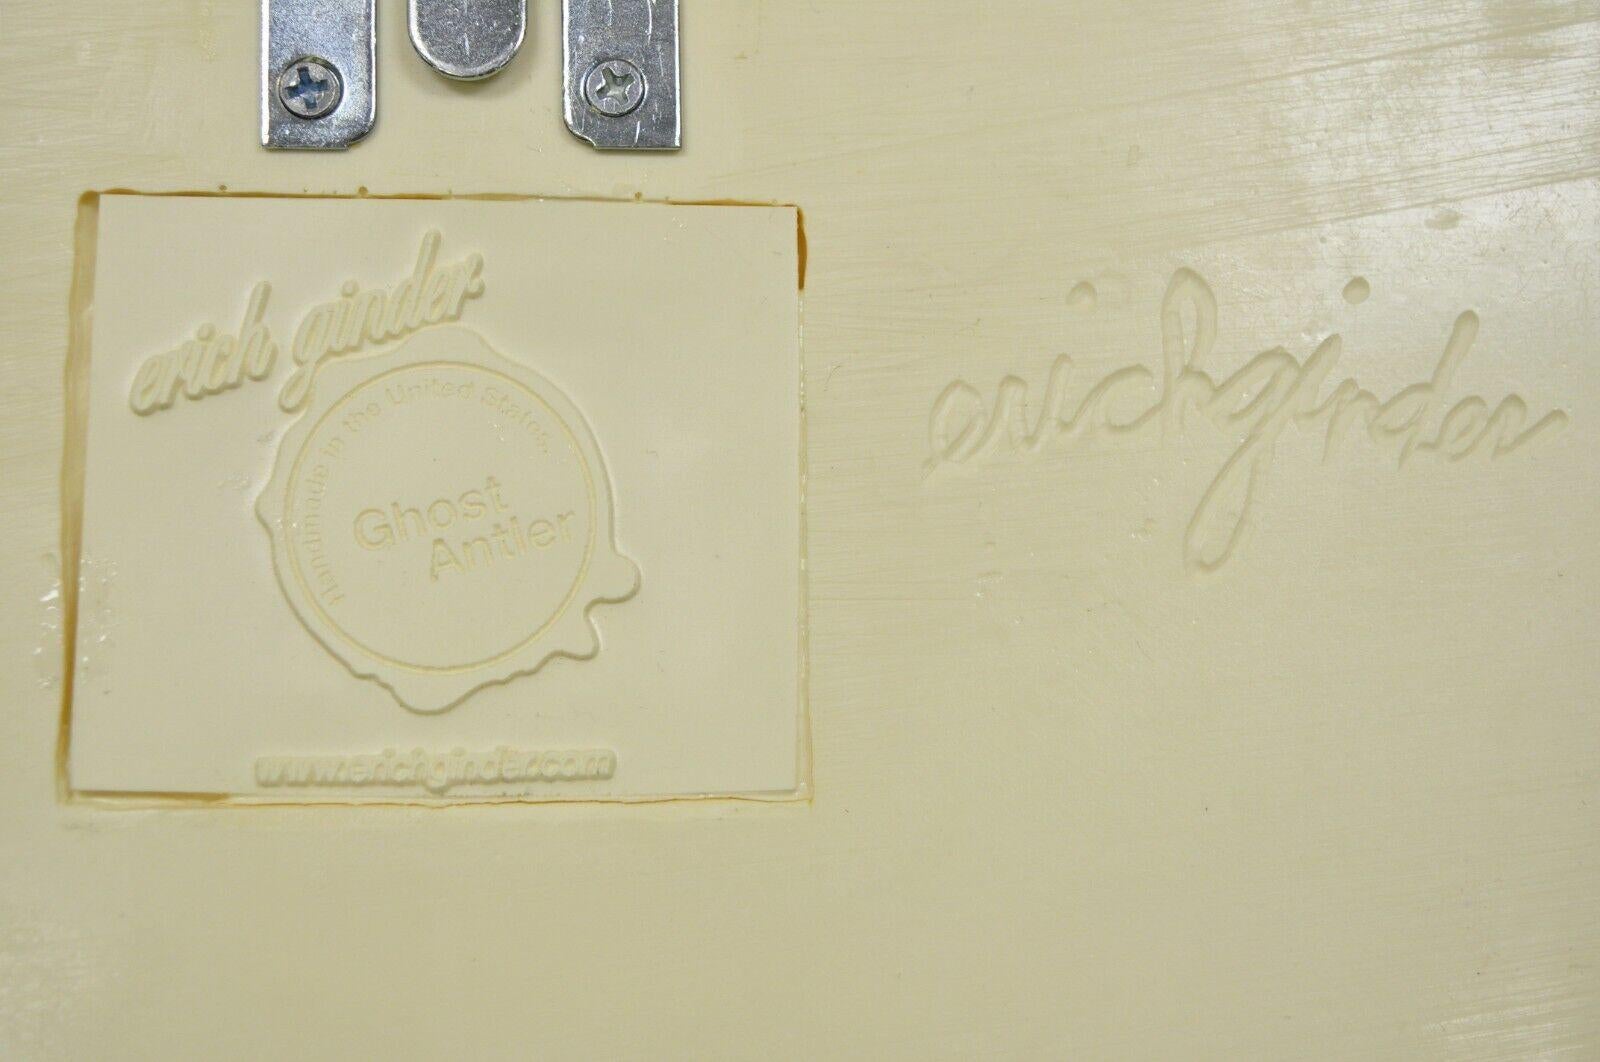 Erich Ginder White Cast Ghost Antler Coat Rack Mid Century Modern Wall Art For Sale 2